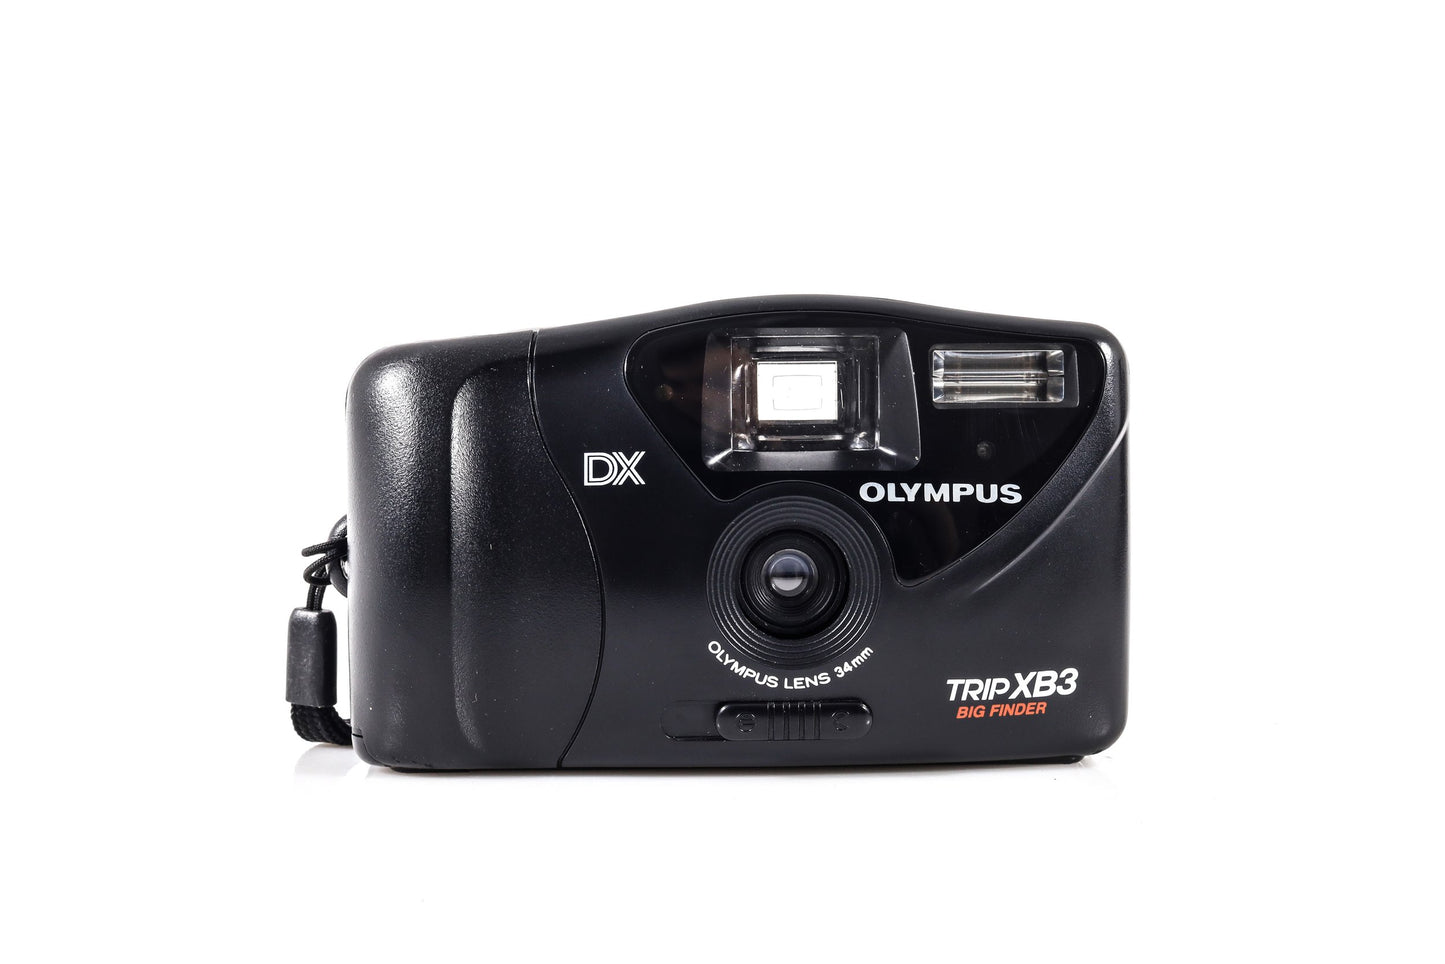 Olympus Trip XB3 Big Finder 35mm Point and Shoot Film Camera - Black